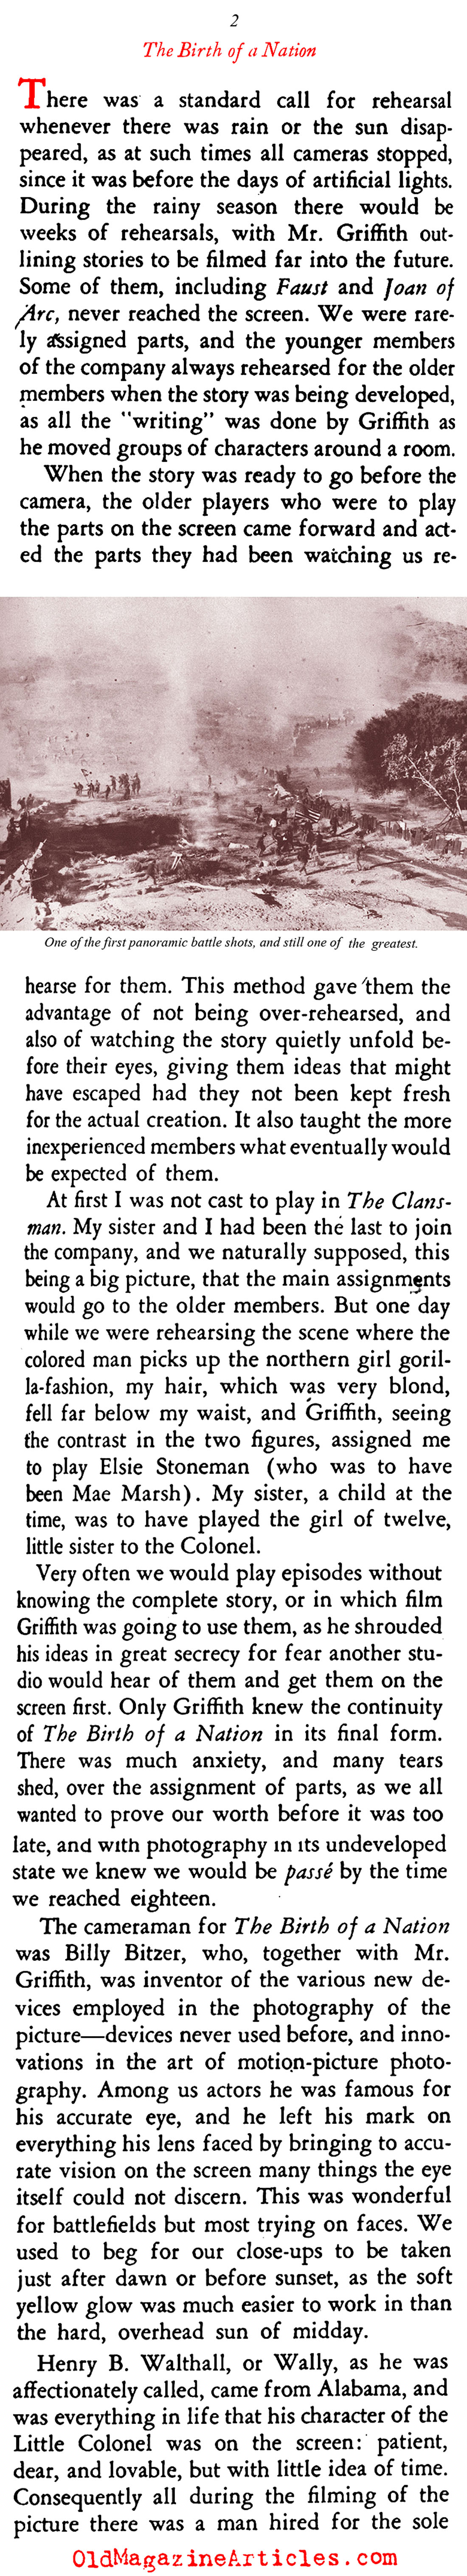 Lillian Gish Recalls Making <i>The Birth of a Nation</i> (Stage Magazine, 1937)